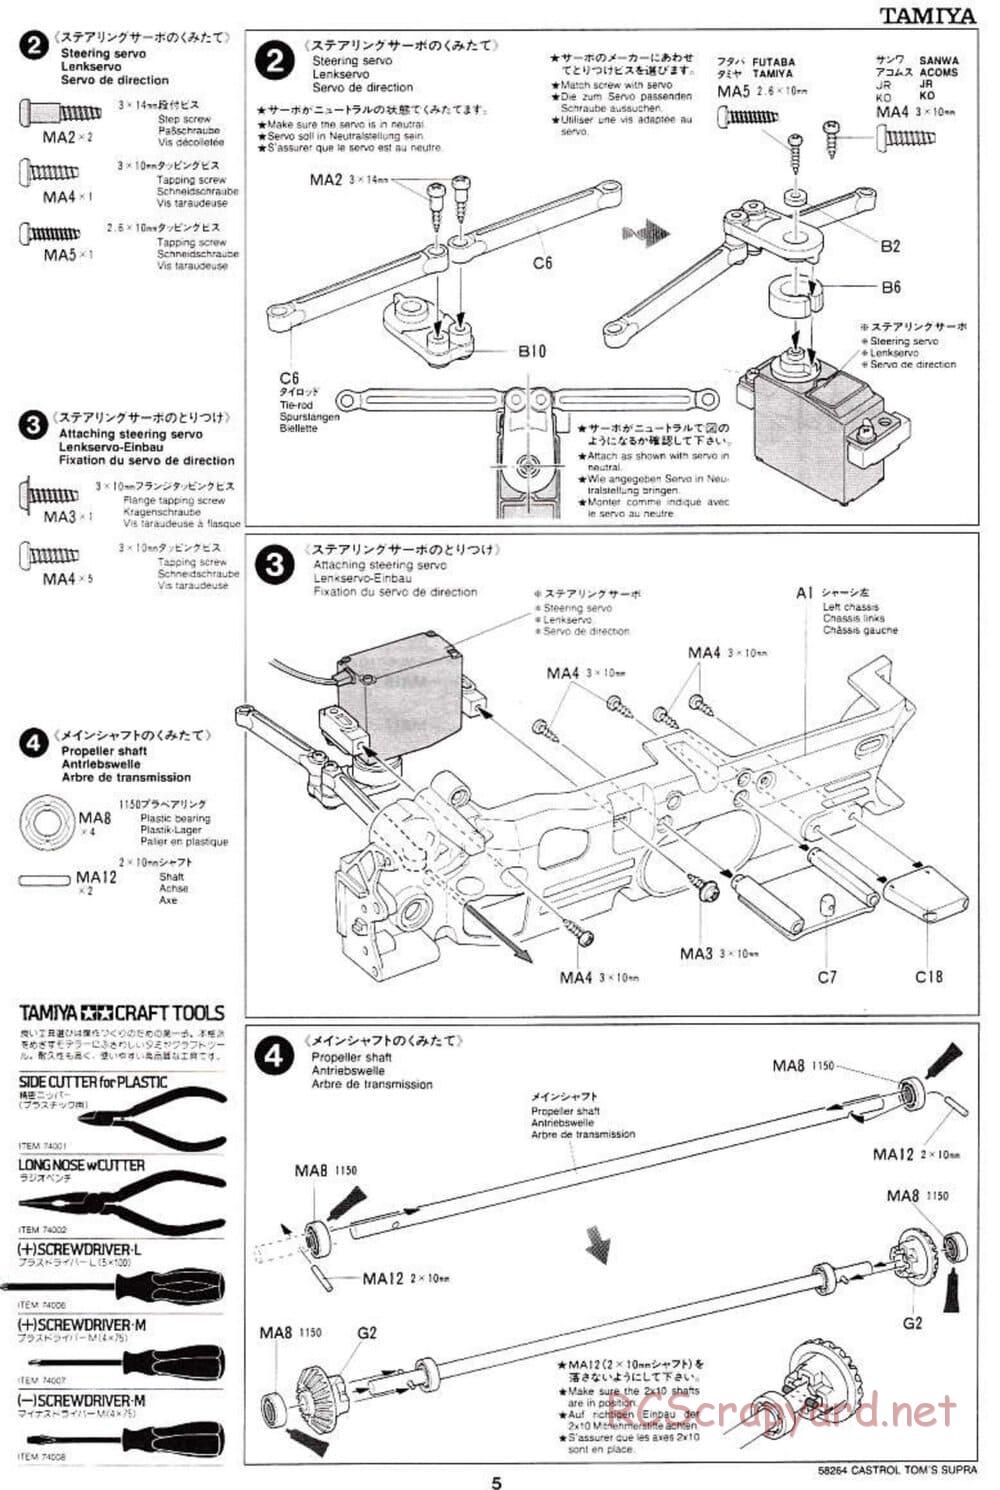 Tamiya - Castrol Tom's Supra 2000 - TL-01 Chassis - Manual - Page 5